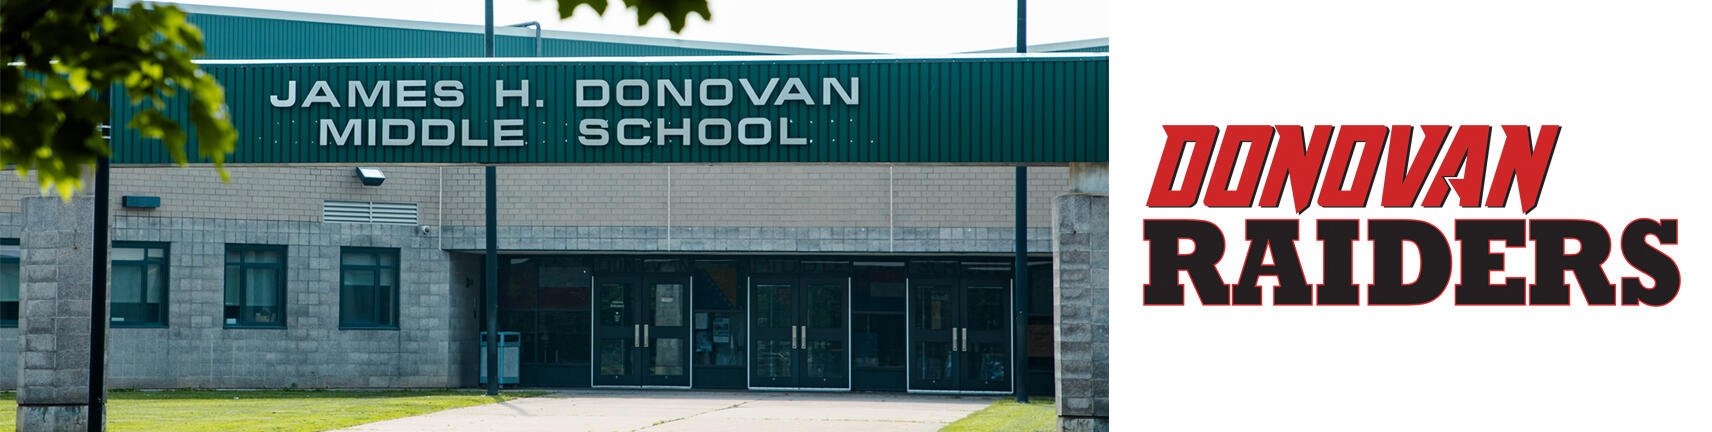 Снимка на сградата на училище Donovan и логото на Donovan Raiders